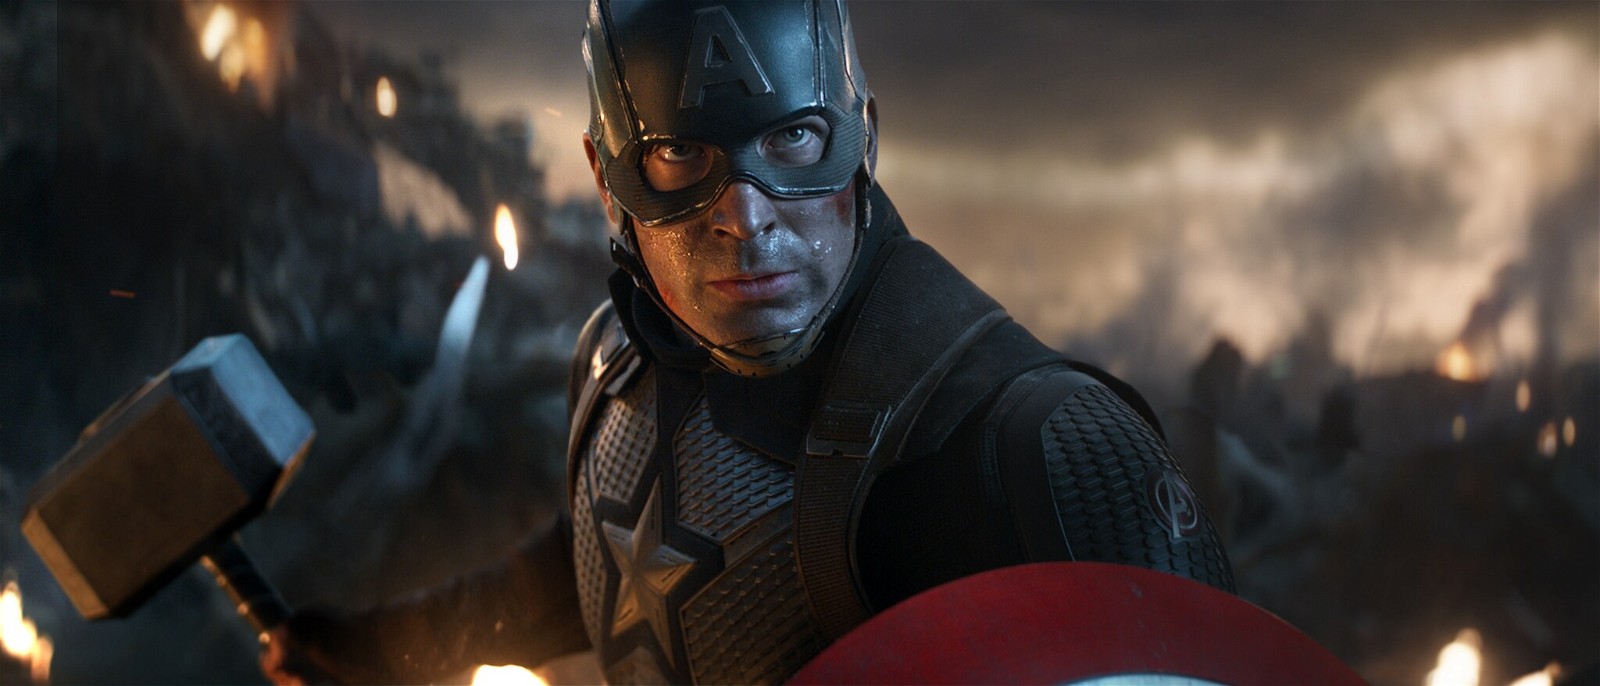 Chris Evans as Captain America lifting the Mjolnir